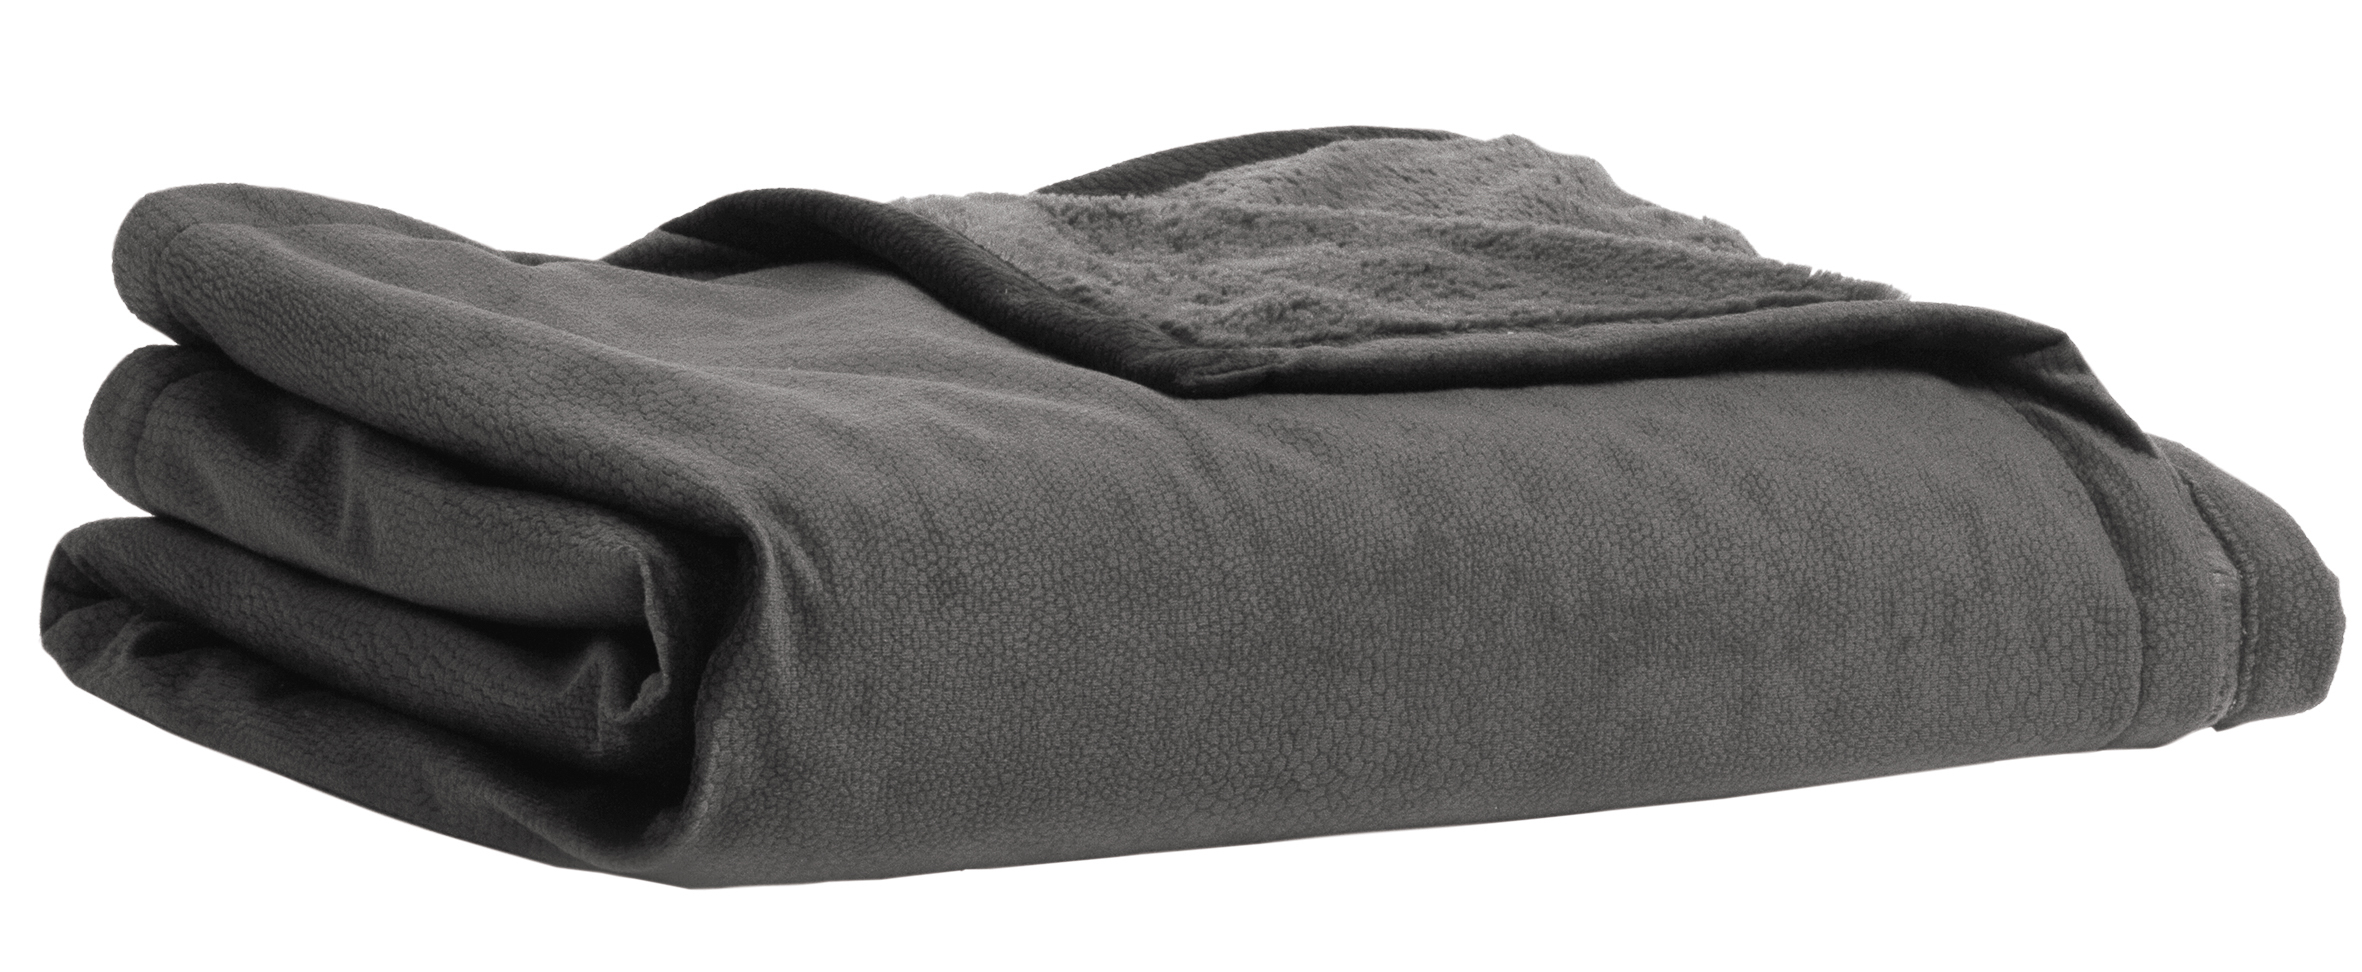 Snake blanket 140x180cm, grey